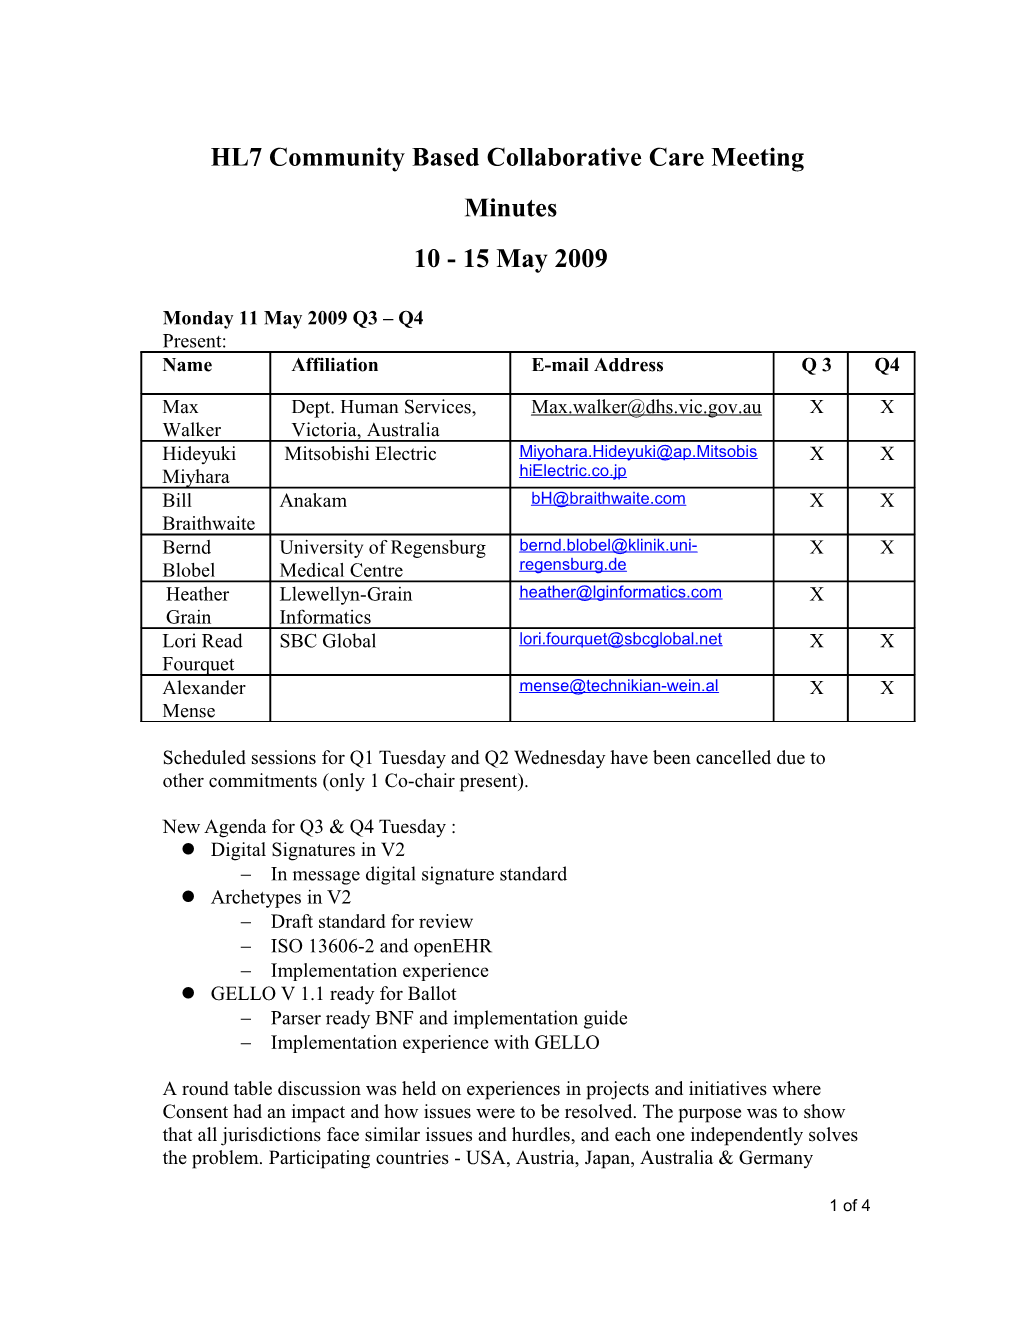 HL7 Community Based Health SIG Meeting Minutes